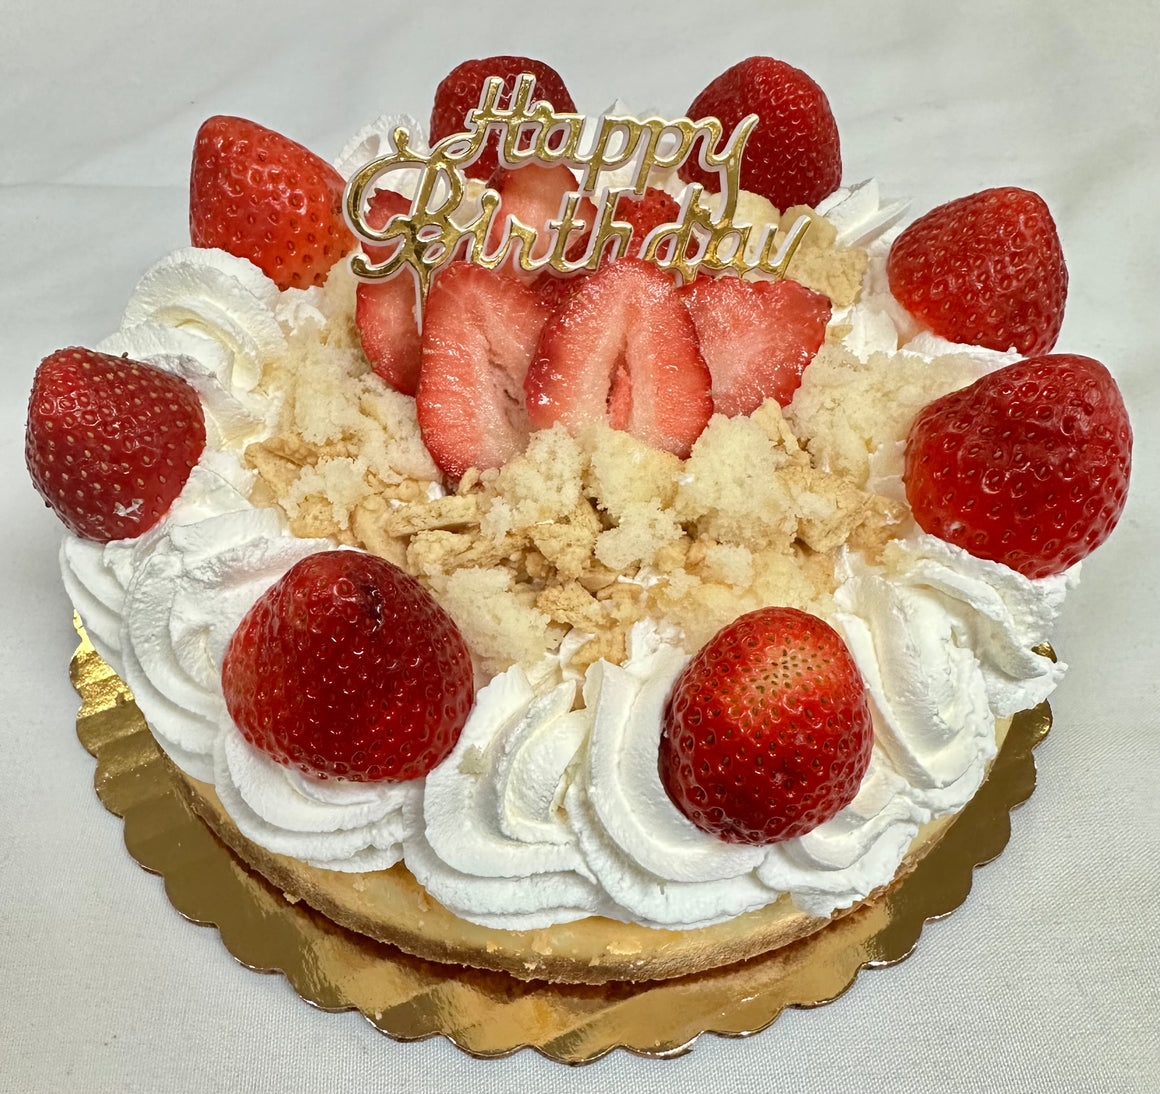 8" Strawberry Shortcake Cheesecake